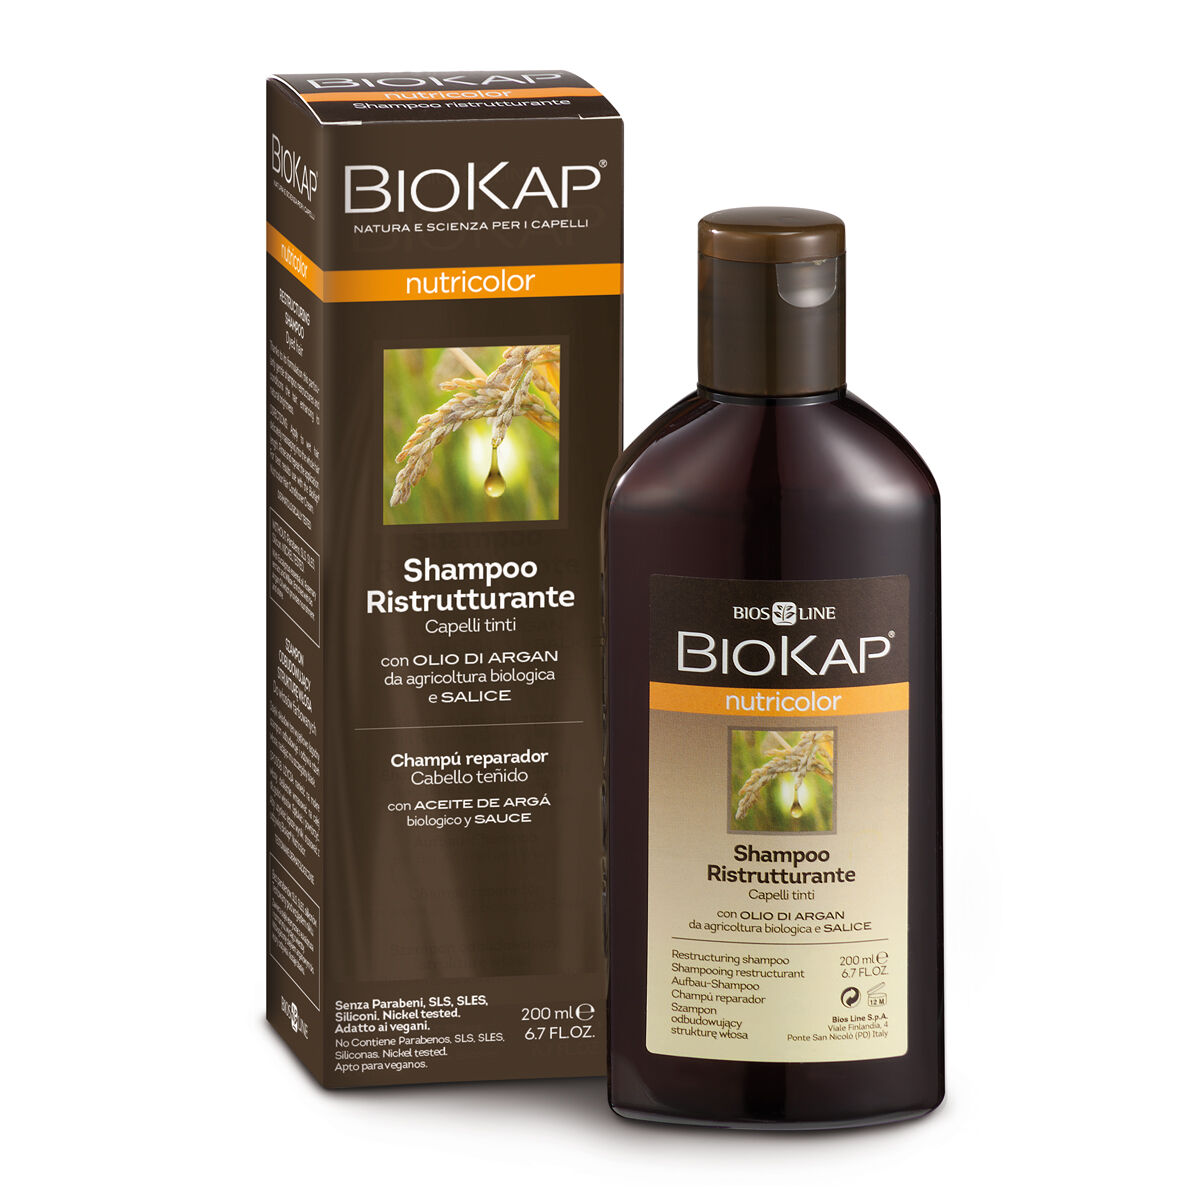 Bios Line BioKap Nutricolor Shampoo Ristrutturante